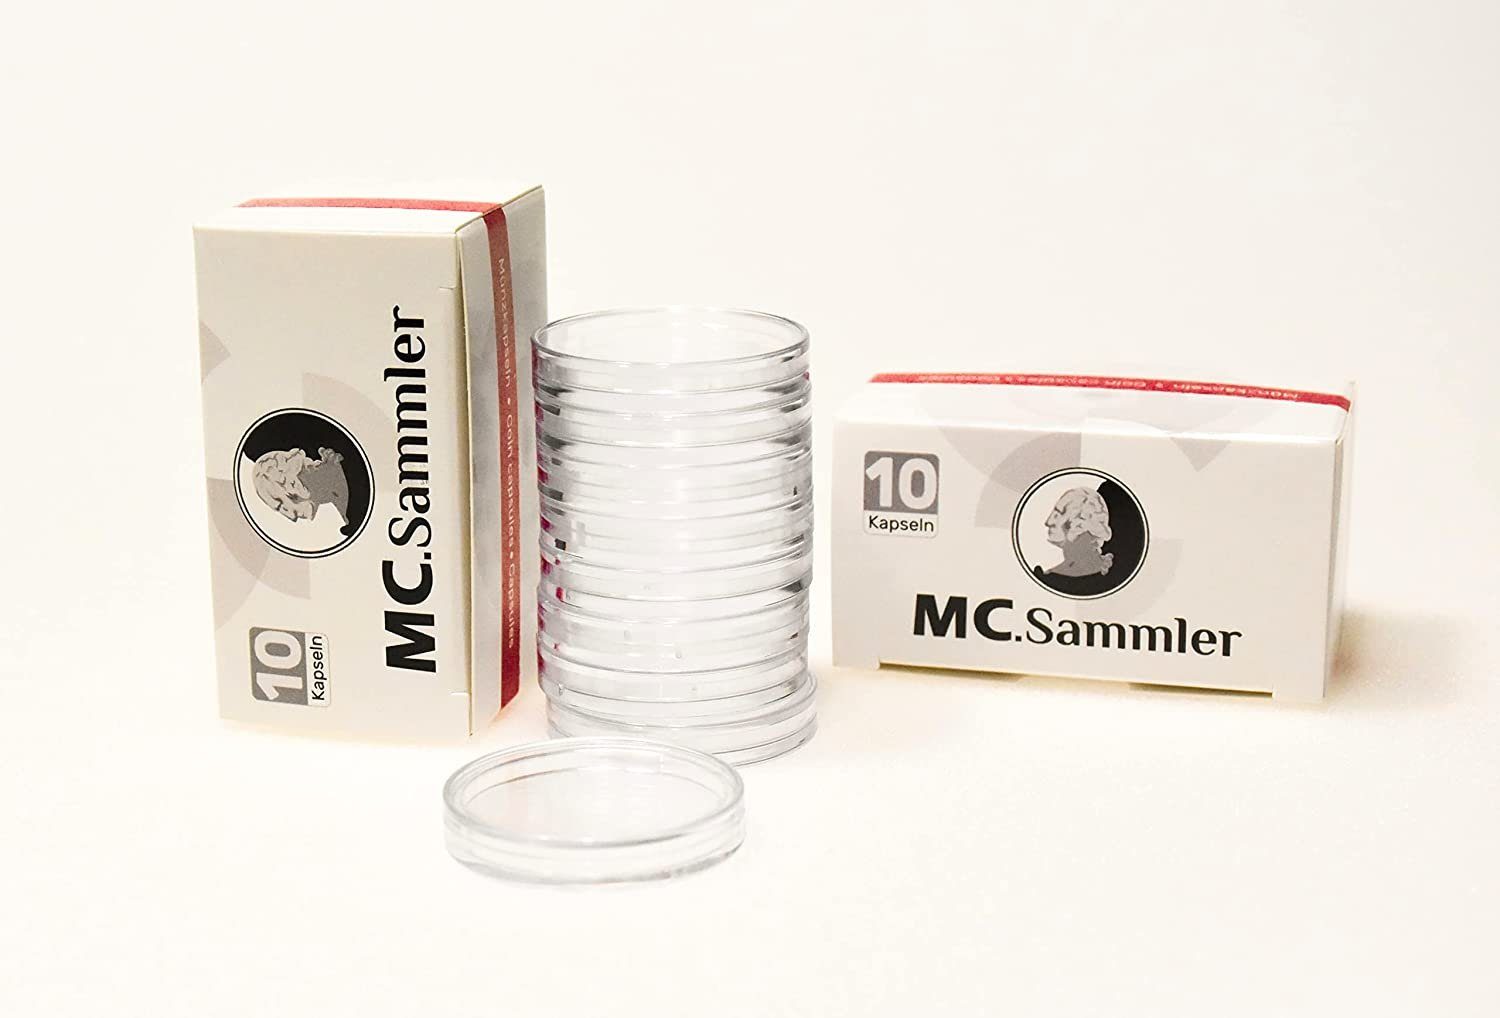 MC.Sammler Kapselhalter Münzkapseln für 2 Euro Münzen 26mm 10 Stück | Kapselspender